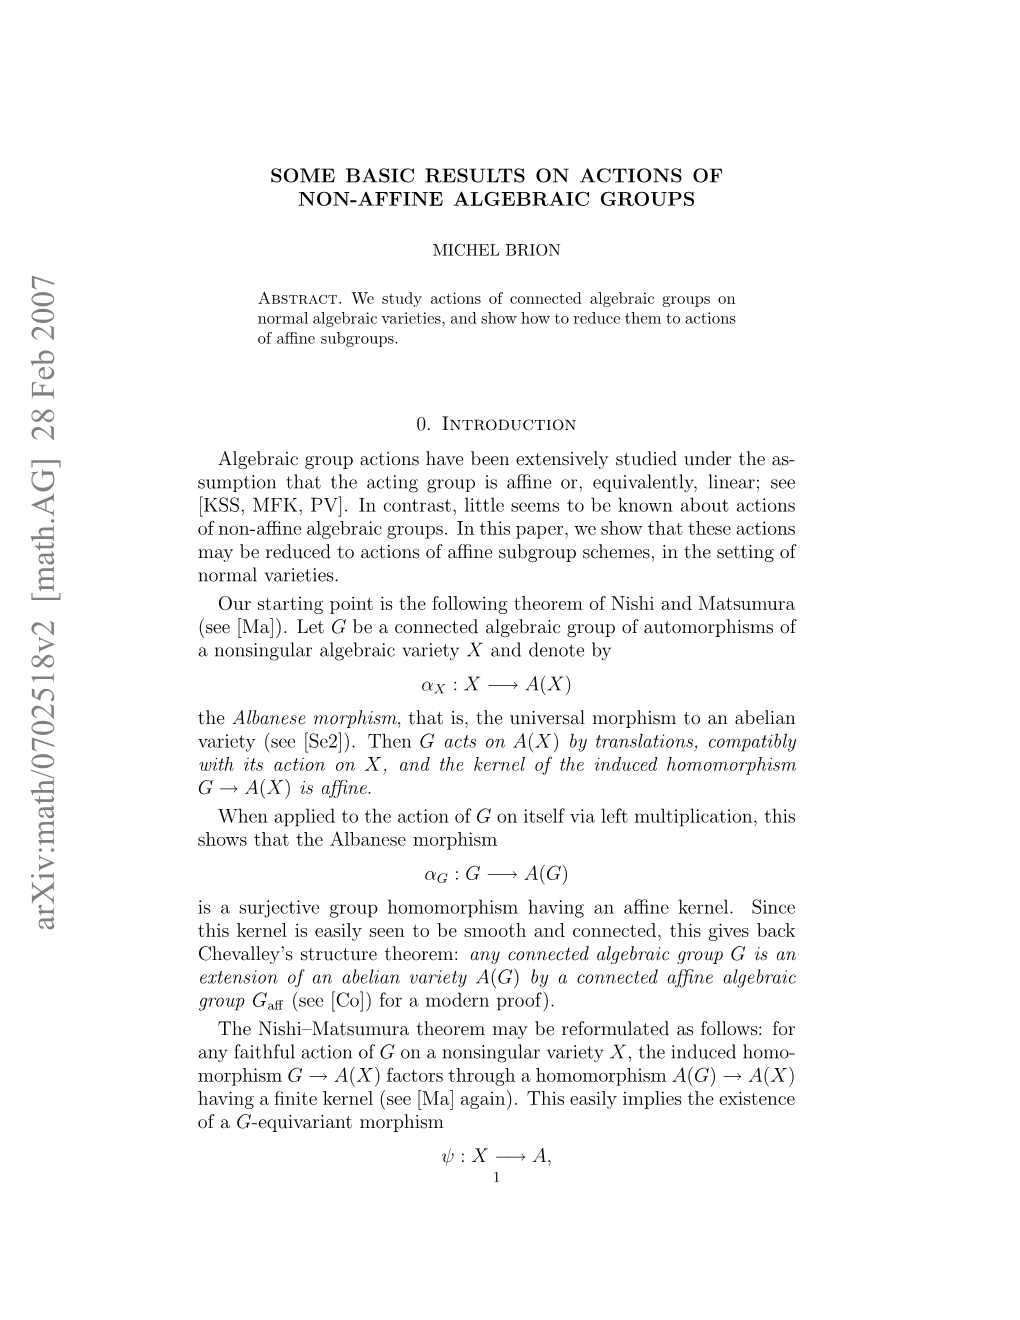 Math.AG] 28 Feb 2007 Osnua Leri Variety Algebraic Nonsingular a the Se[A) Let [Ma])